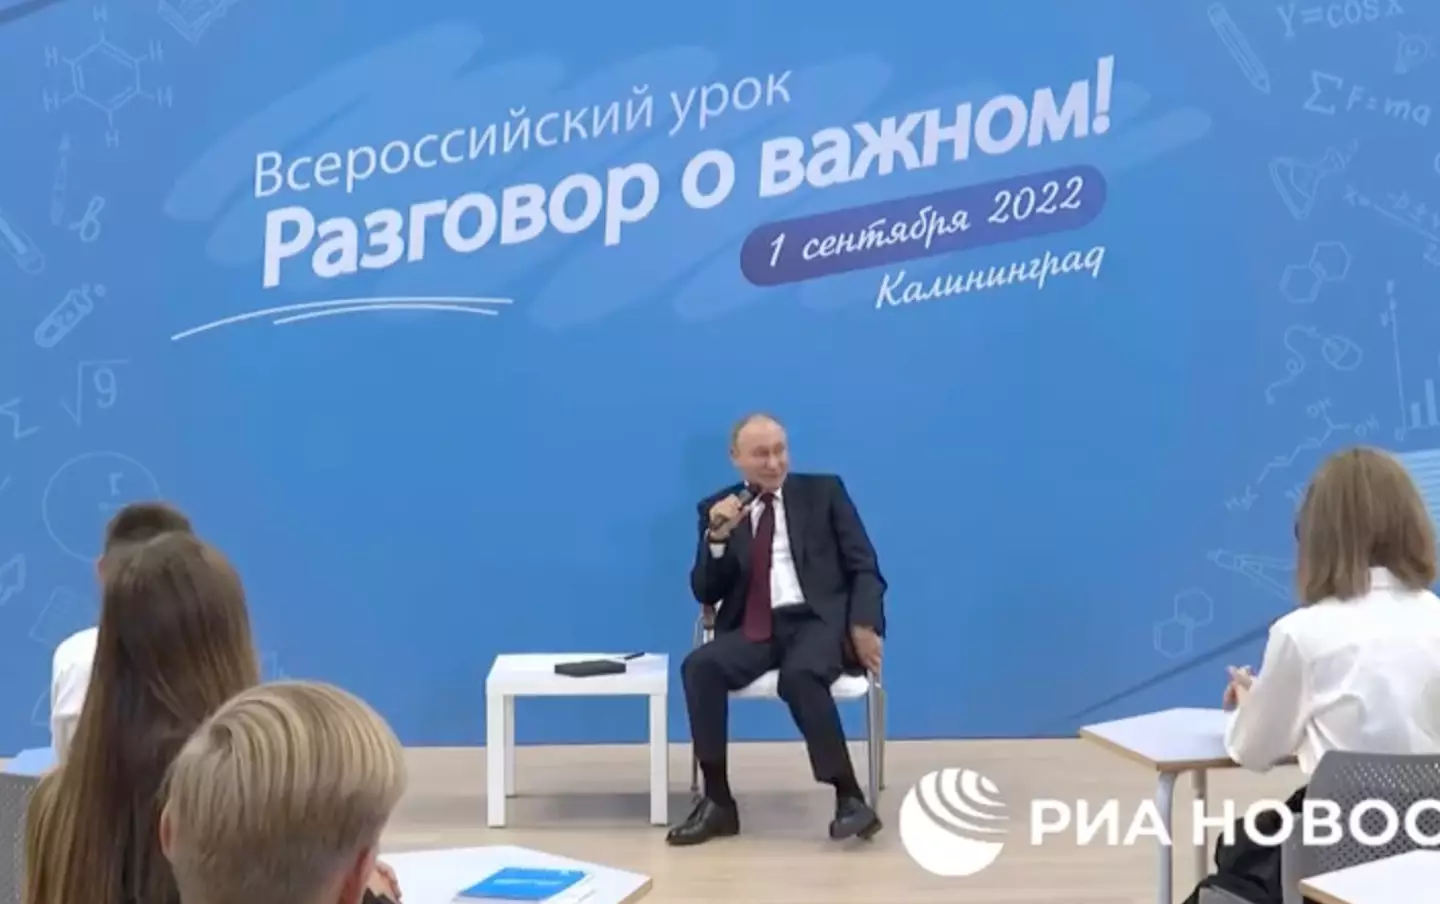 Vladimir Putin addressing kids in Kaliningrad.